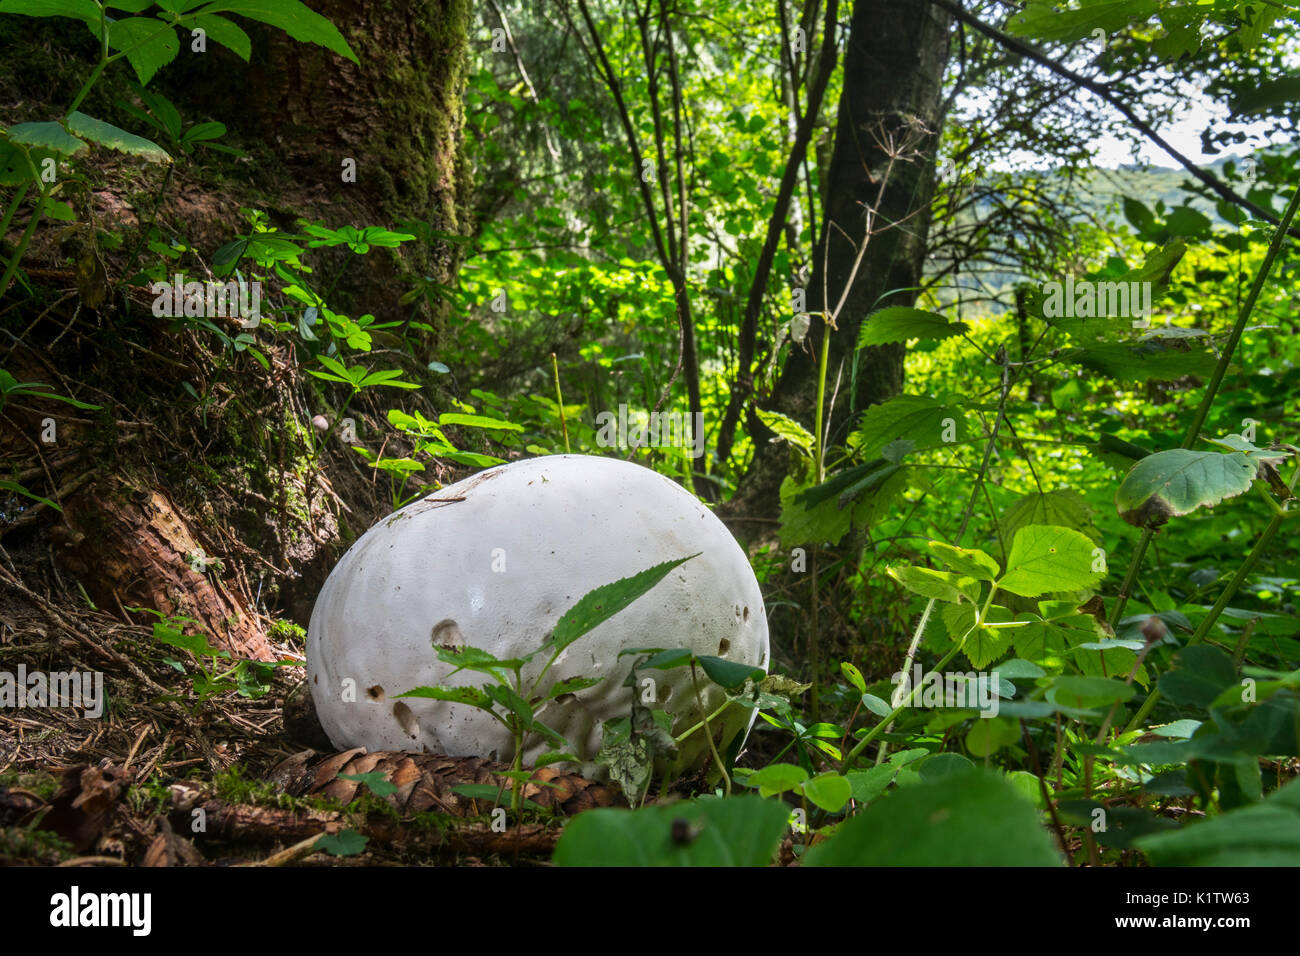 Giant puffball (Calvatia gigantea / Langermannia gigantea) on the forest floor in late summer Stock Photo